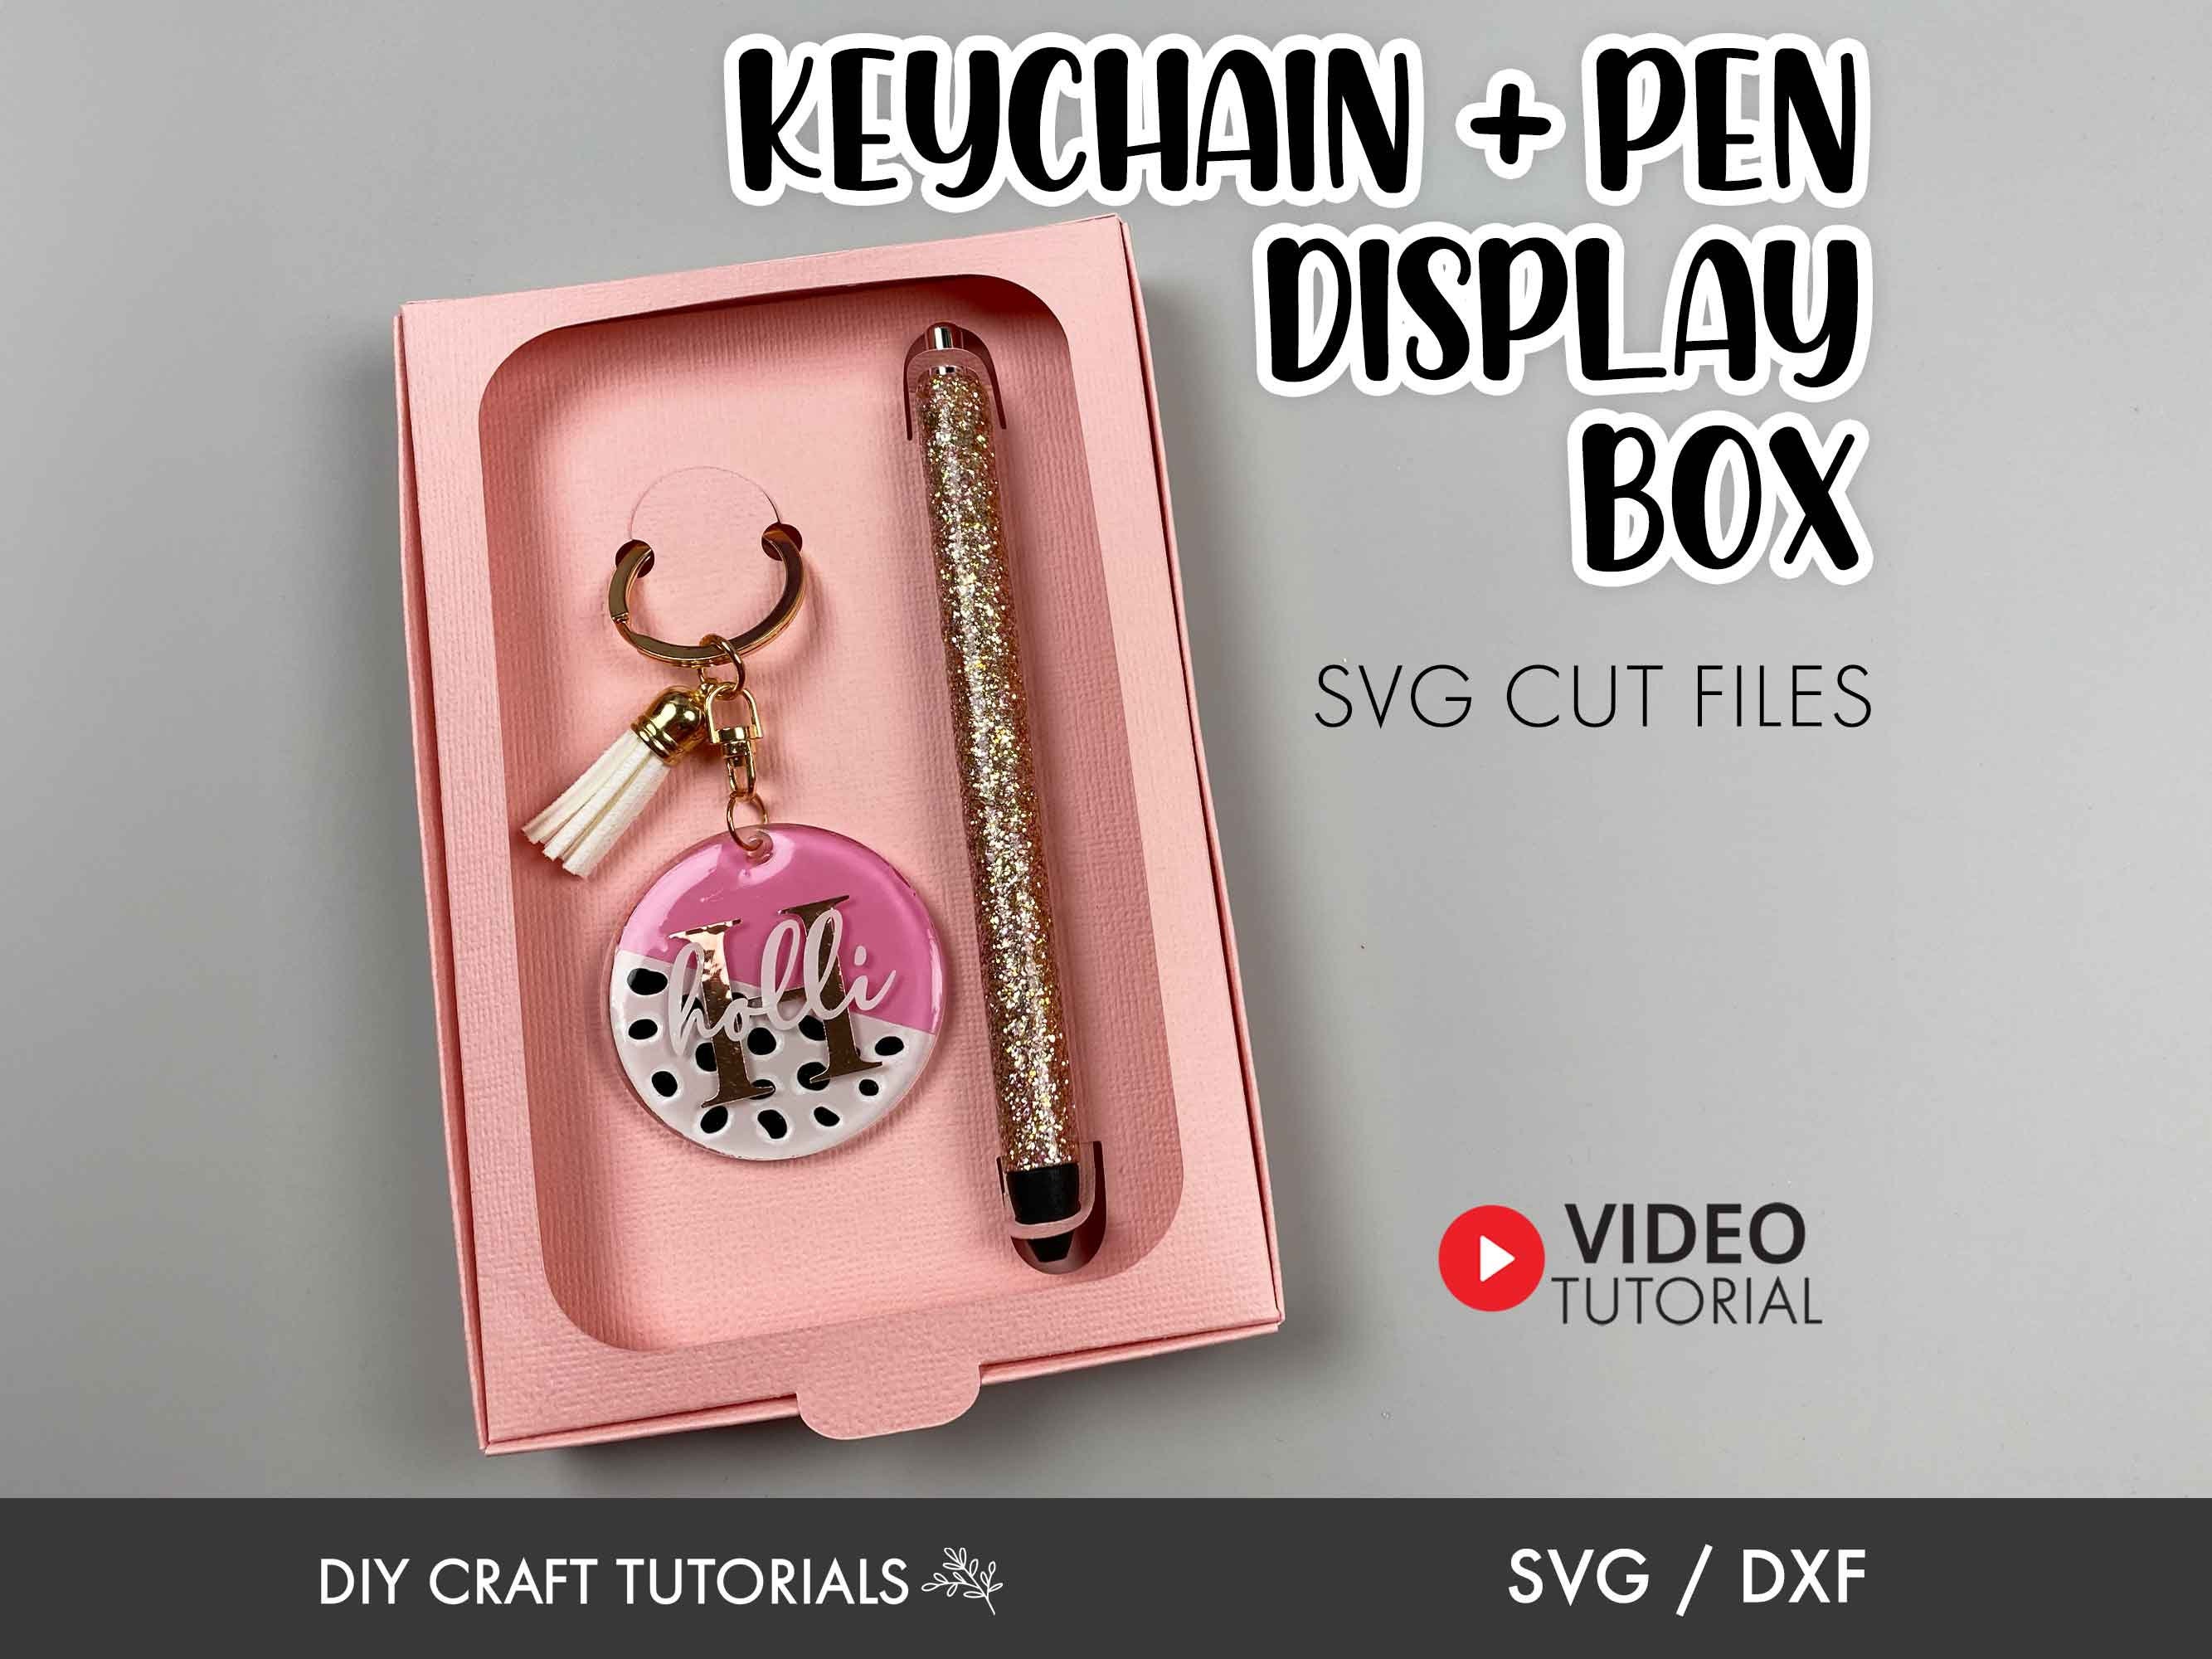 Pink Pawfect Keychain Kit